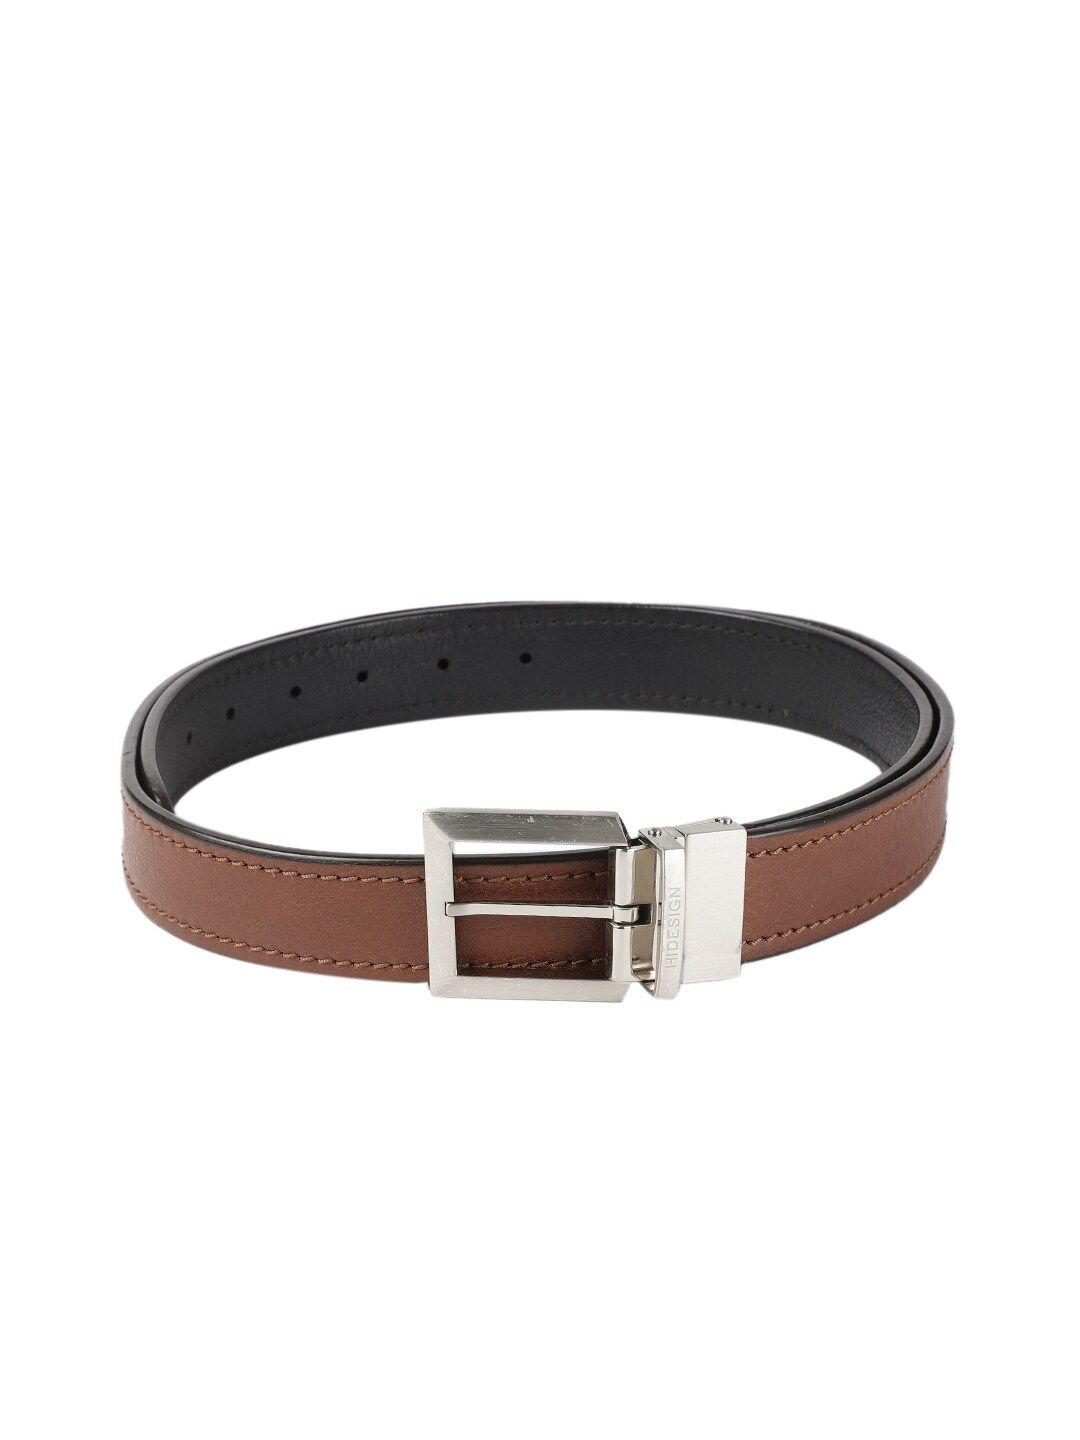 hidesign men tan brown & black solid reversible leather belt